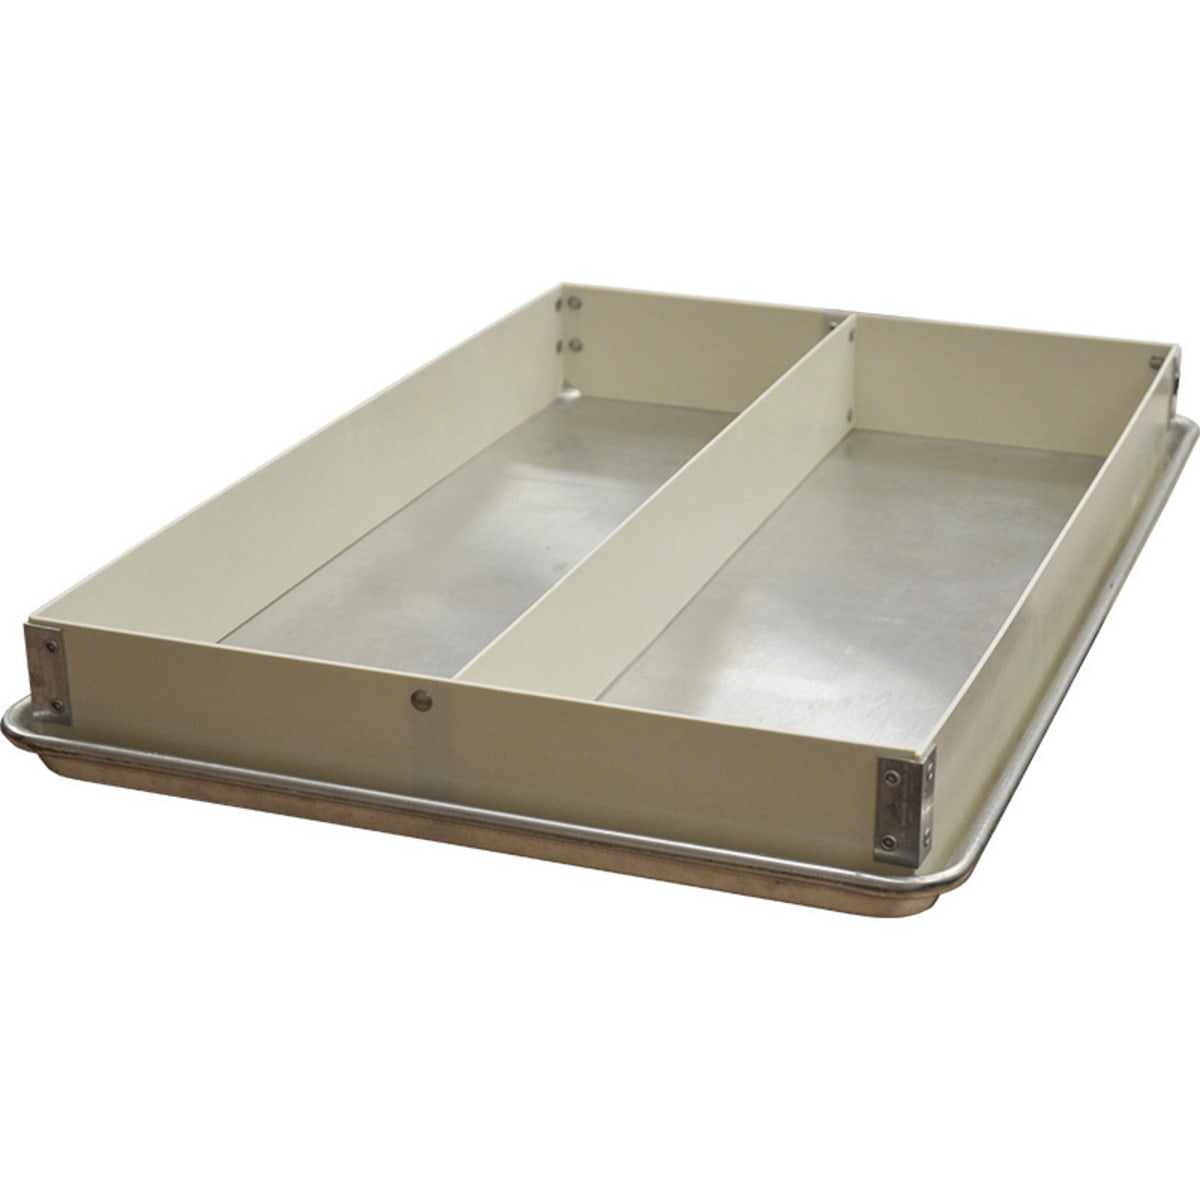 Full-Size Fiberglass Sheet Pan Extender - Divided in 2 Sections